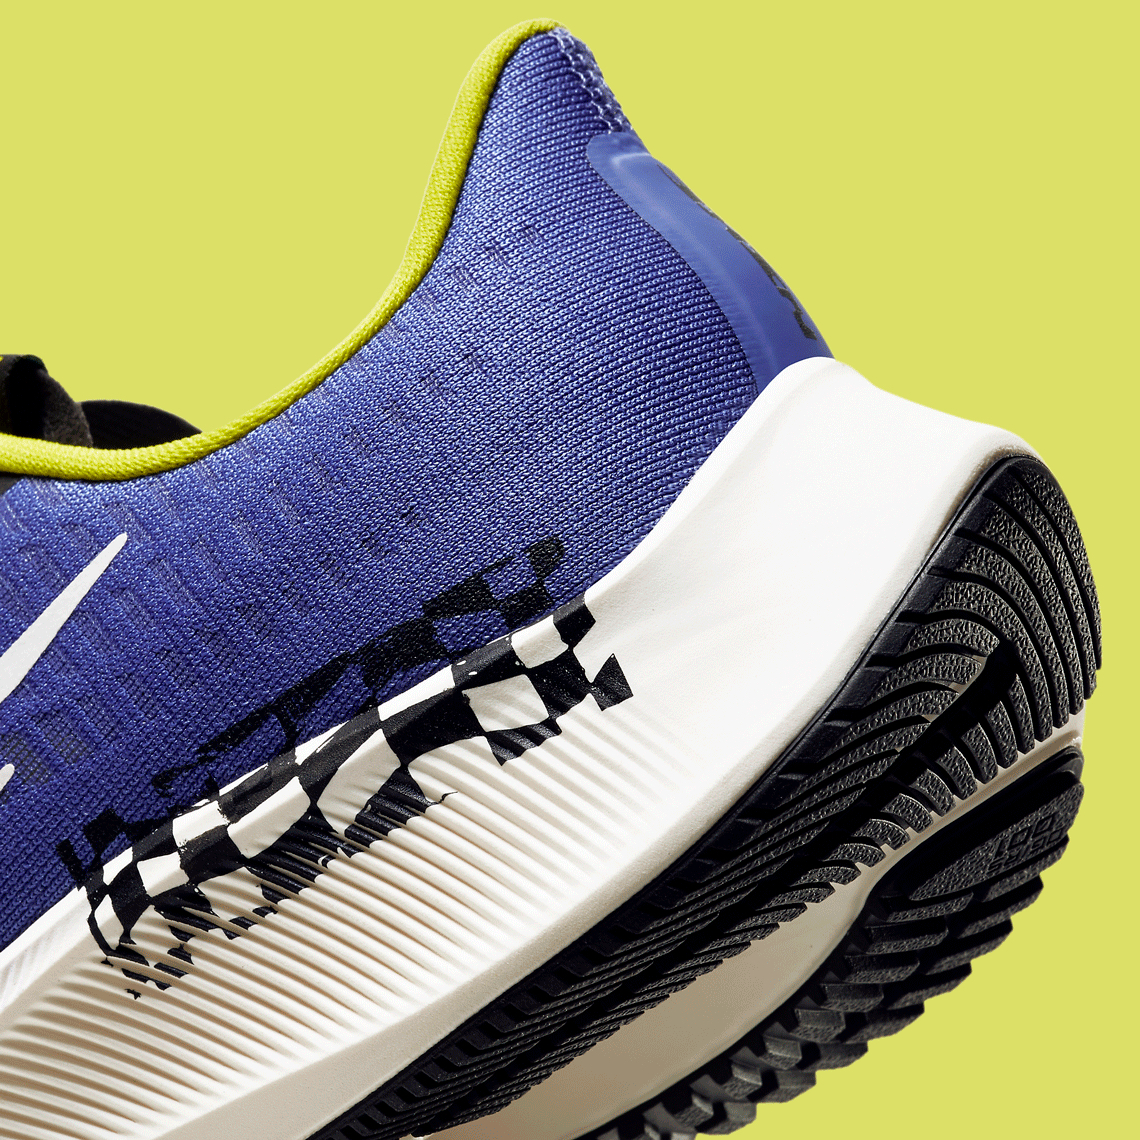 Toro Y Moi Chaz Bundick Nike Running Collaboration | SneakerNews.com